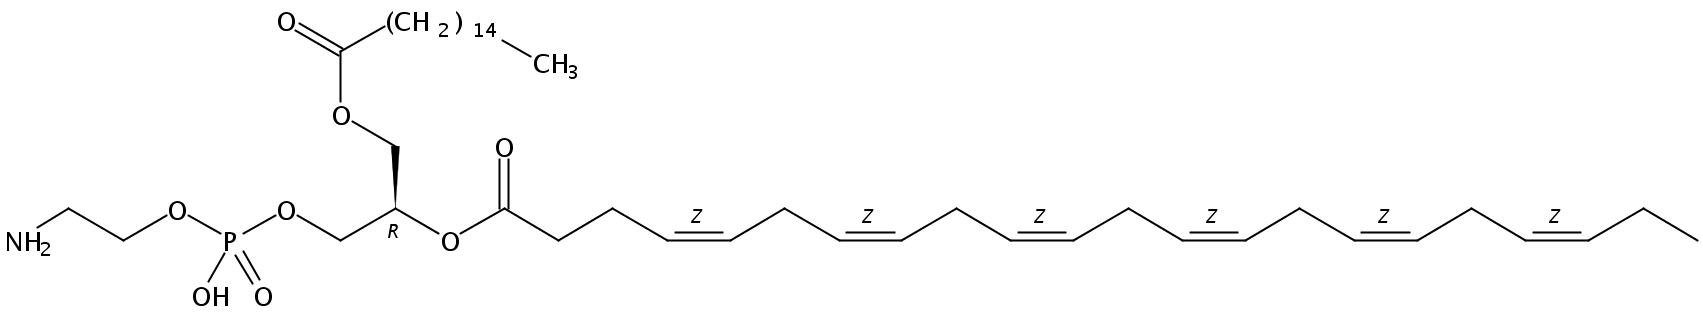 Structural formula of 1-Palmitoyl-2-Docosahexenoyl-sn-Glycero-3-Phosphatidylethanolamine